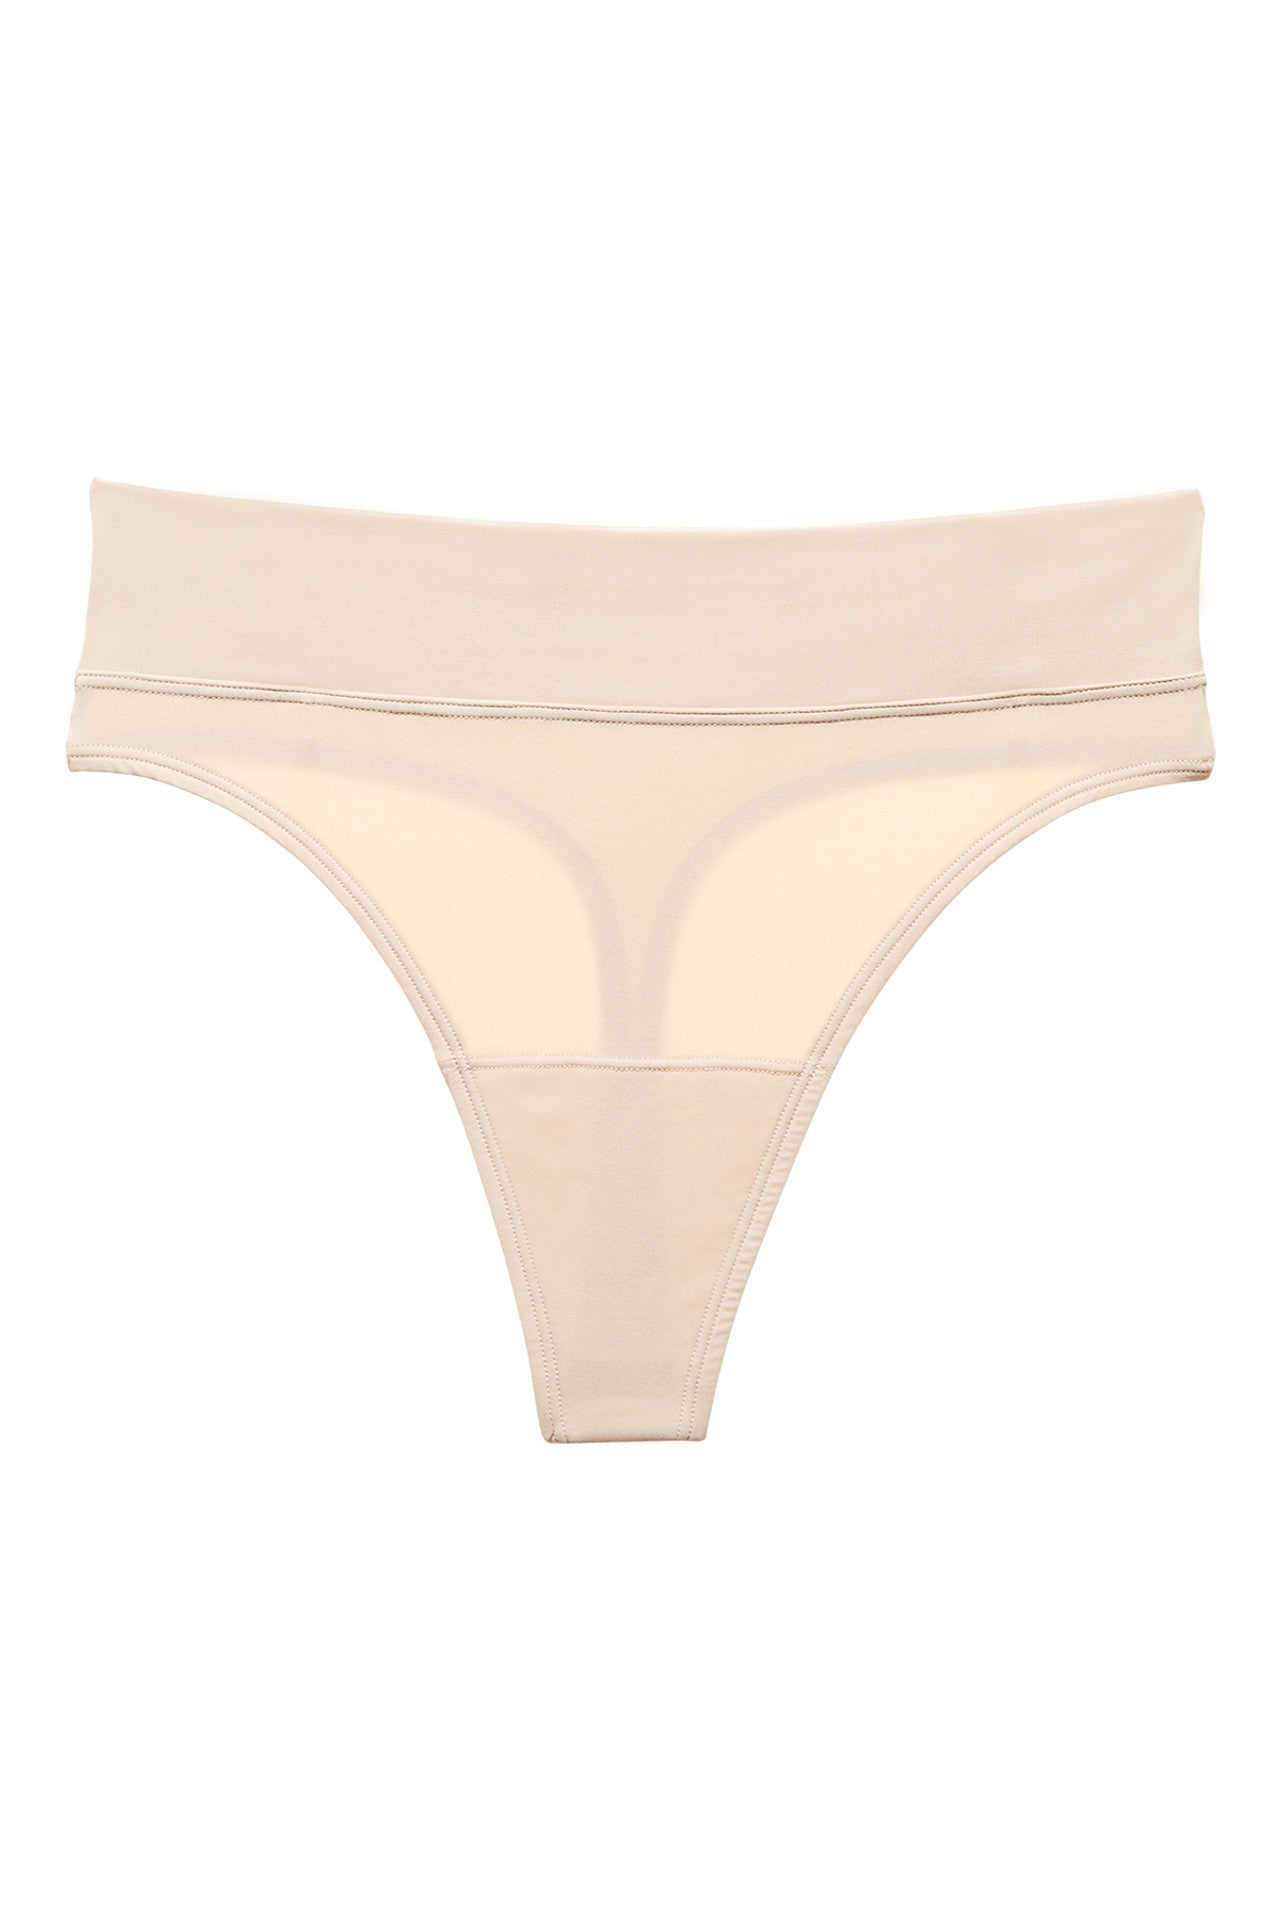 Marilyn Monroe Women's Underwear – Seamless, Low- Rise, No Show Thong  Panties 5 Pack